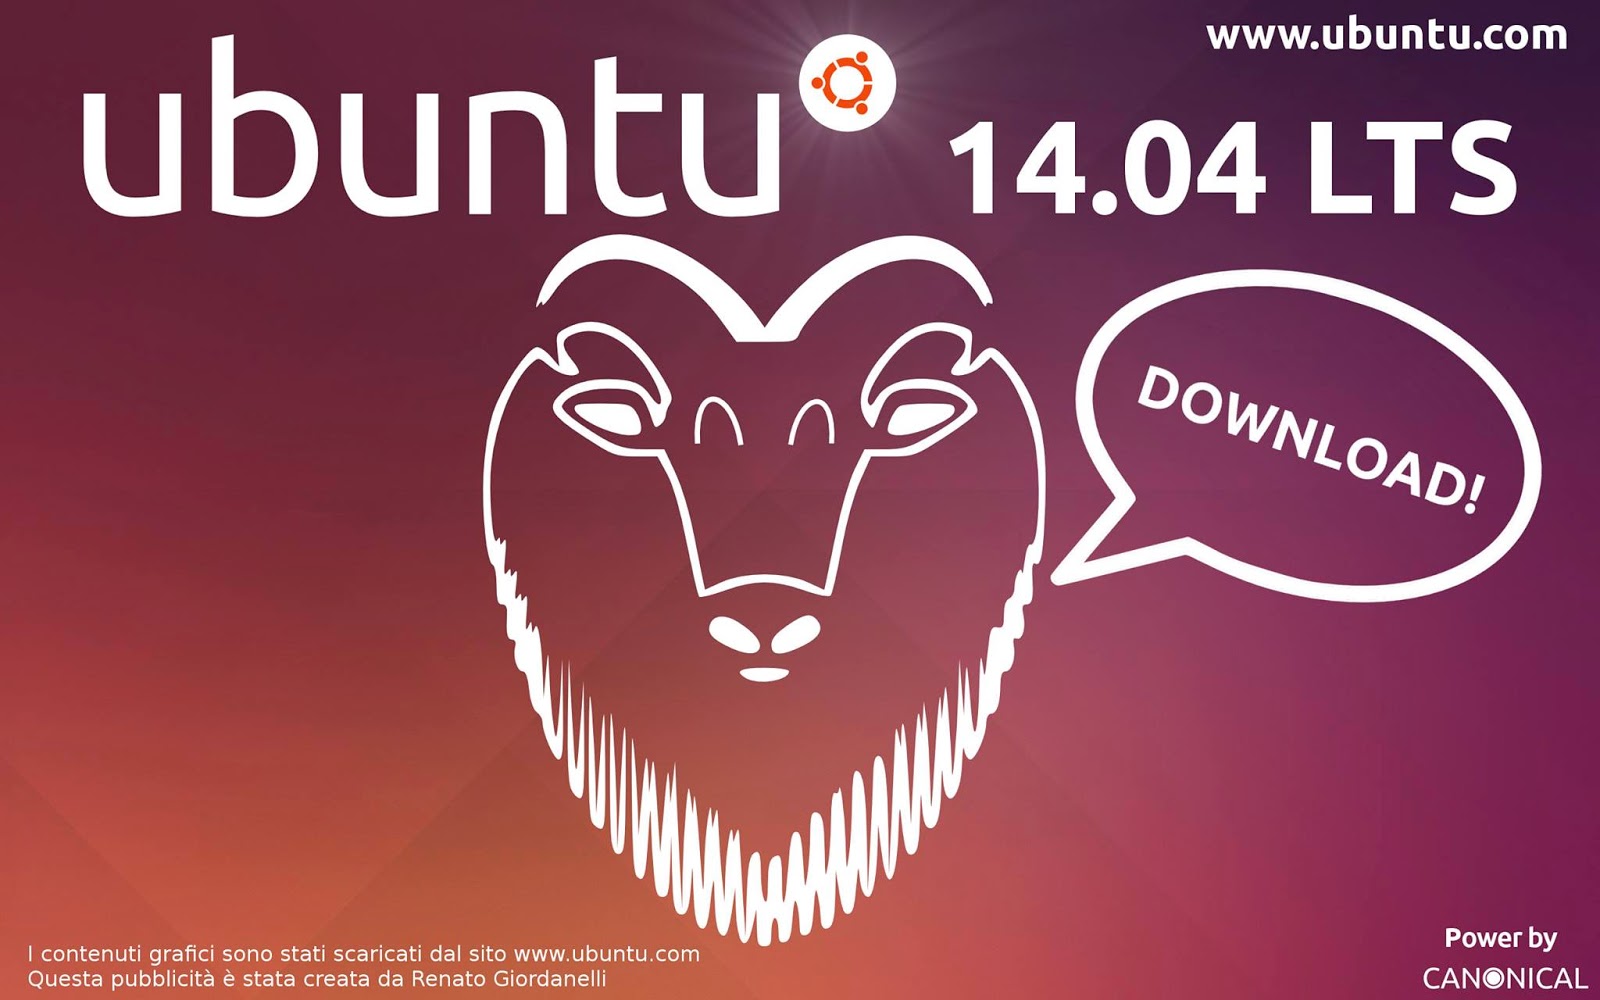 where to download ubuntu 14.04